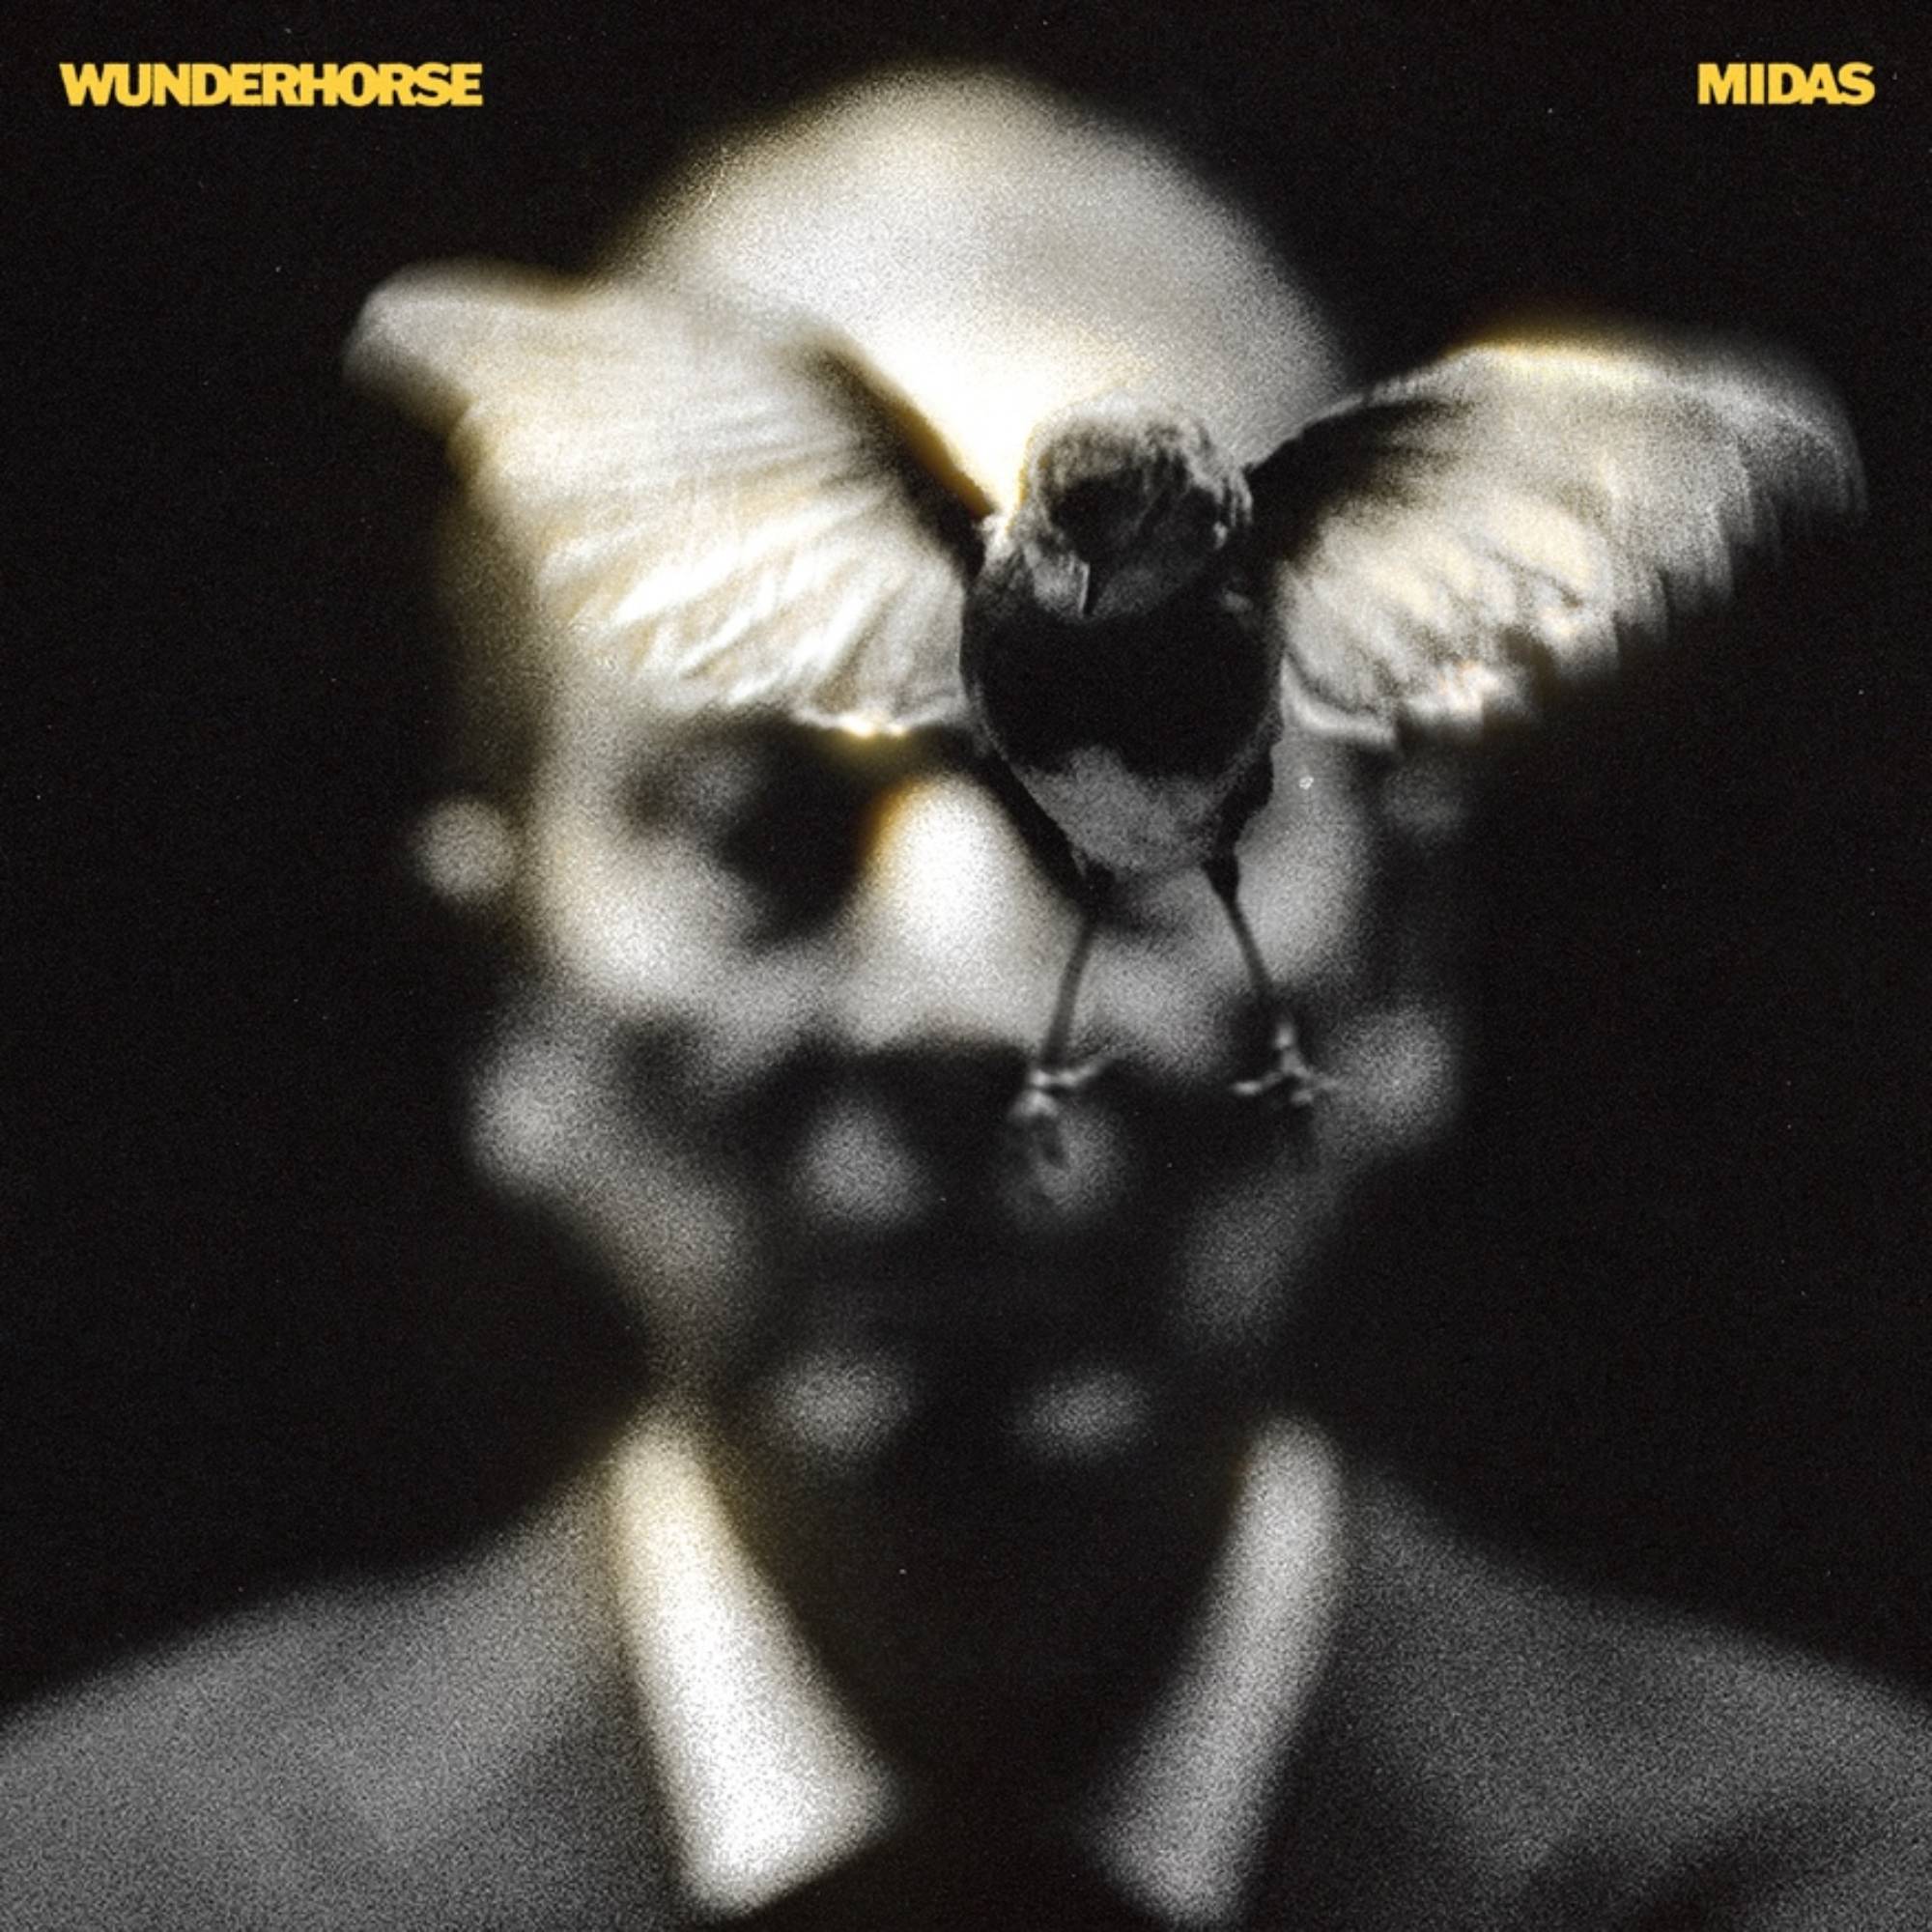 Wunderhorse 'Midas' album artwork. Credit: PRESS